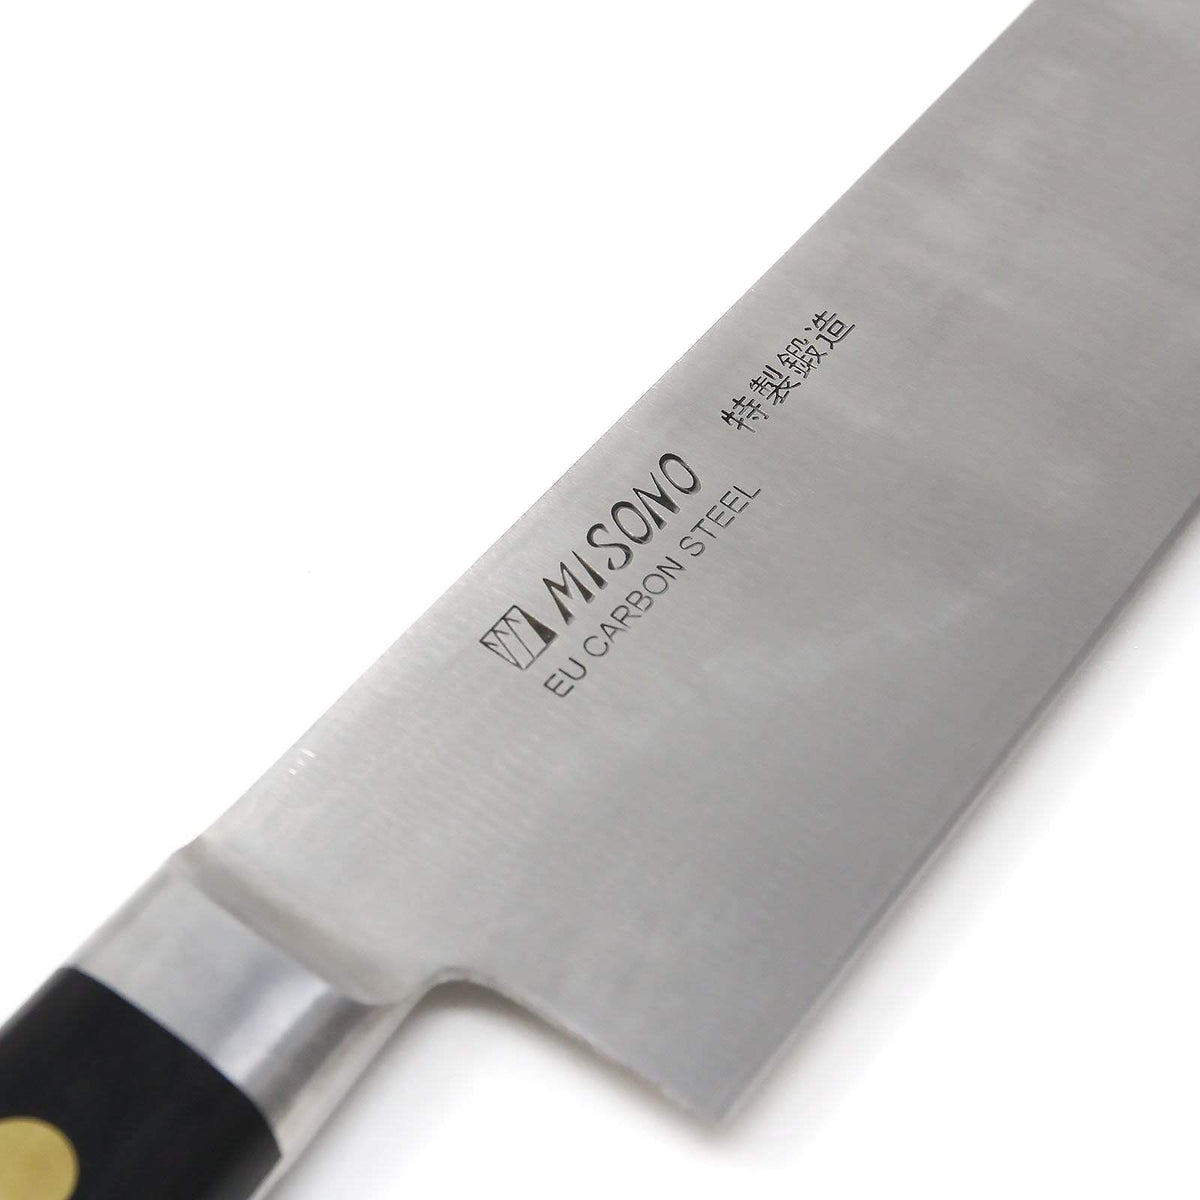 Misono 440 Gyutou 240mm (9.4) - Japanese Chef Knives